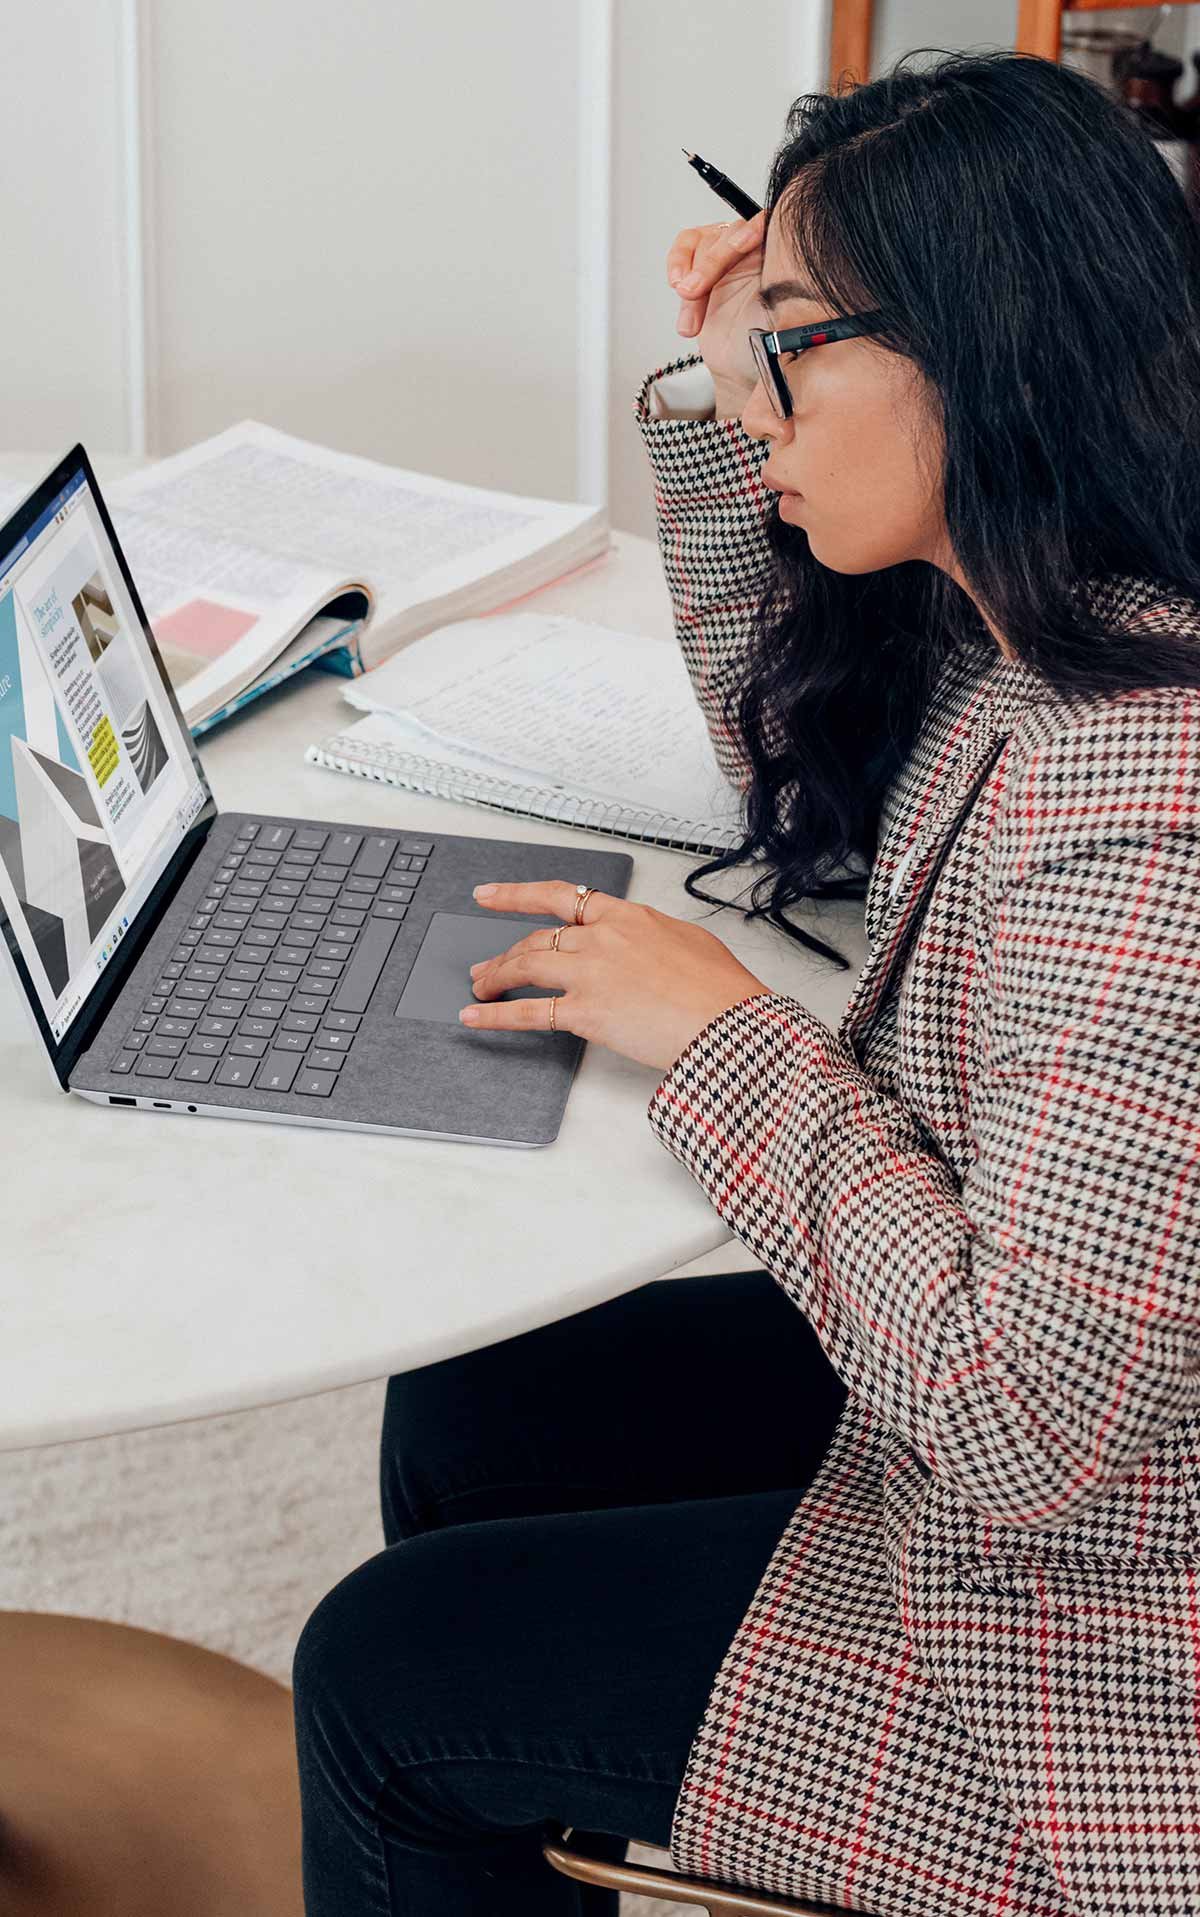 Female web designer working on laptop.